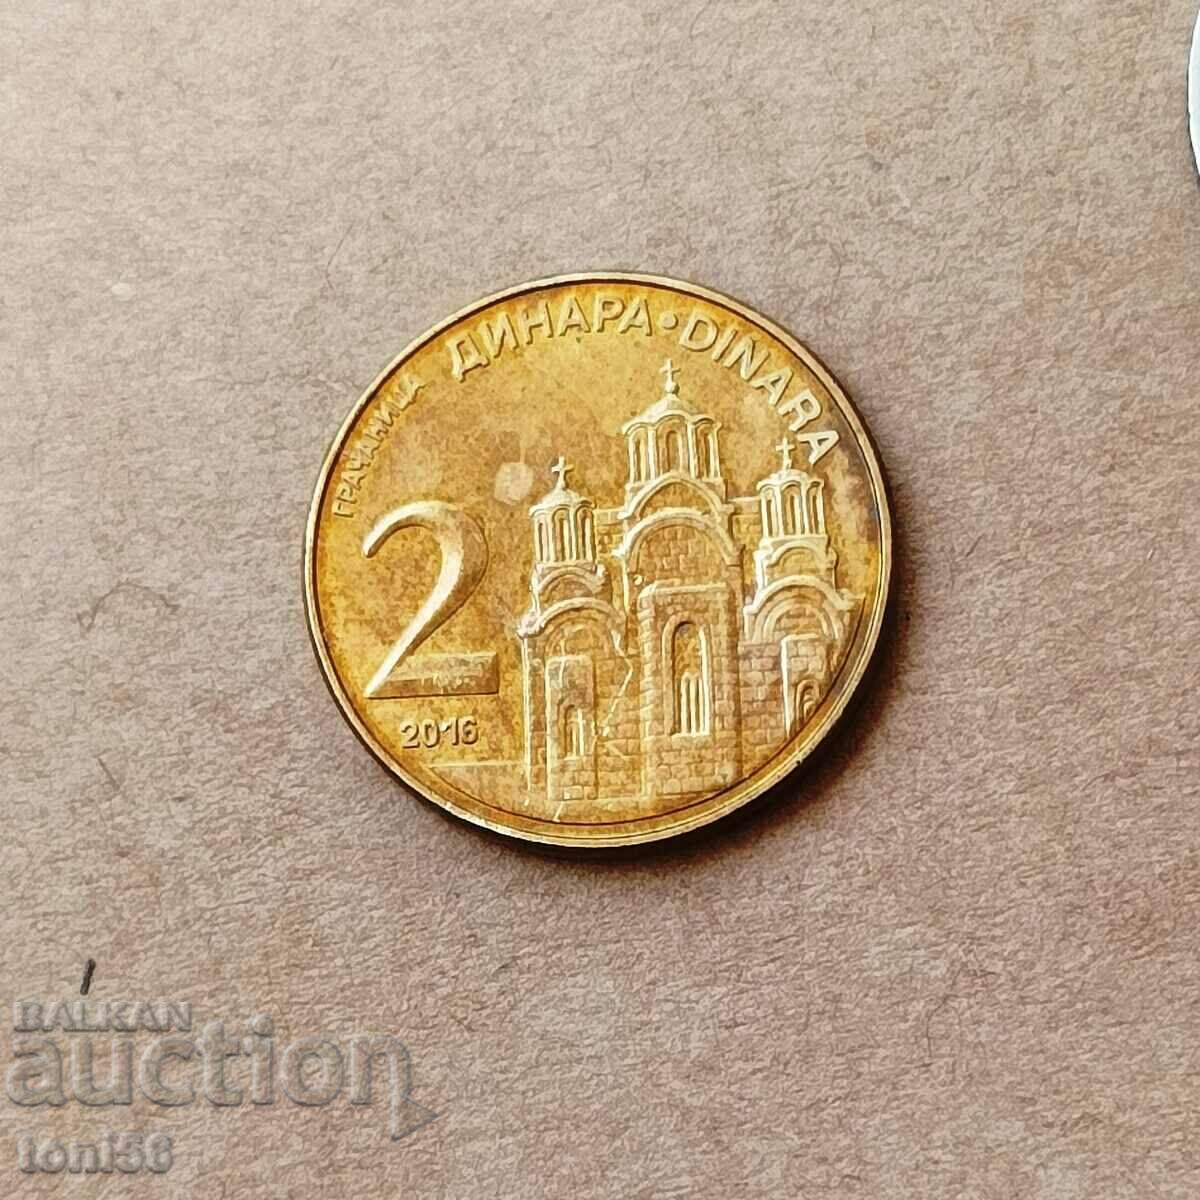 Serbia 2 dinars 2016